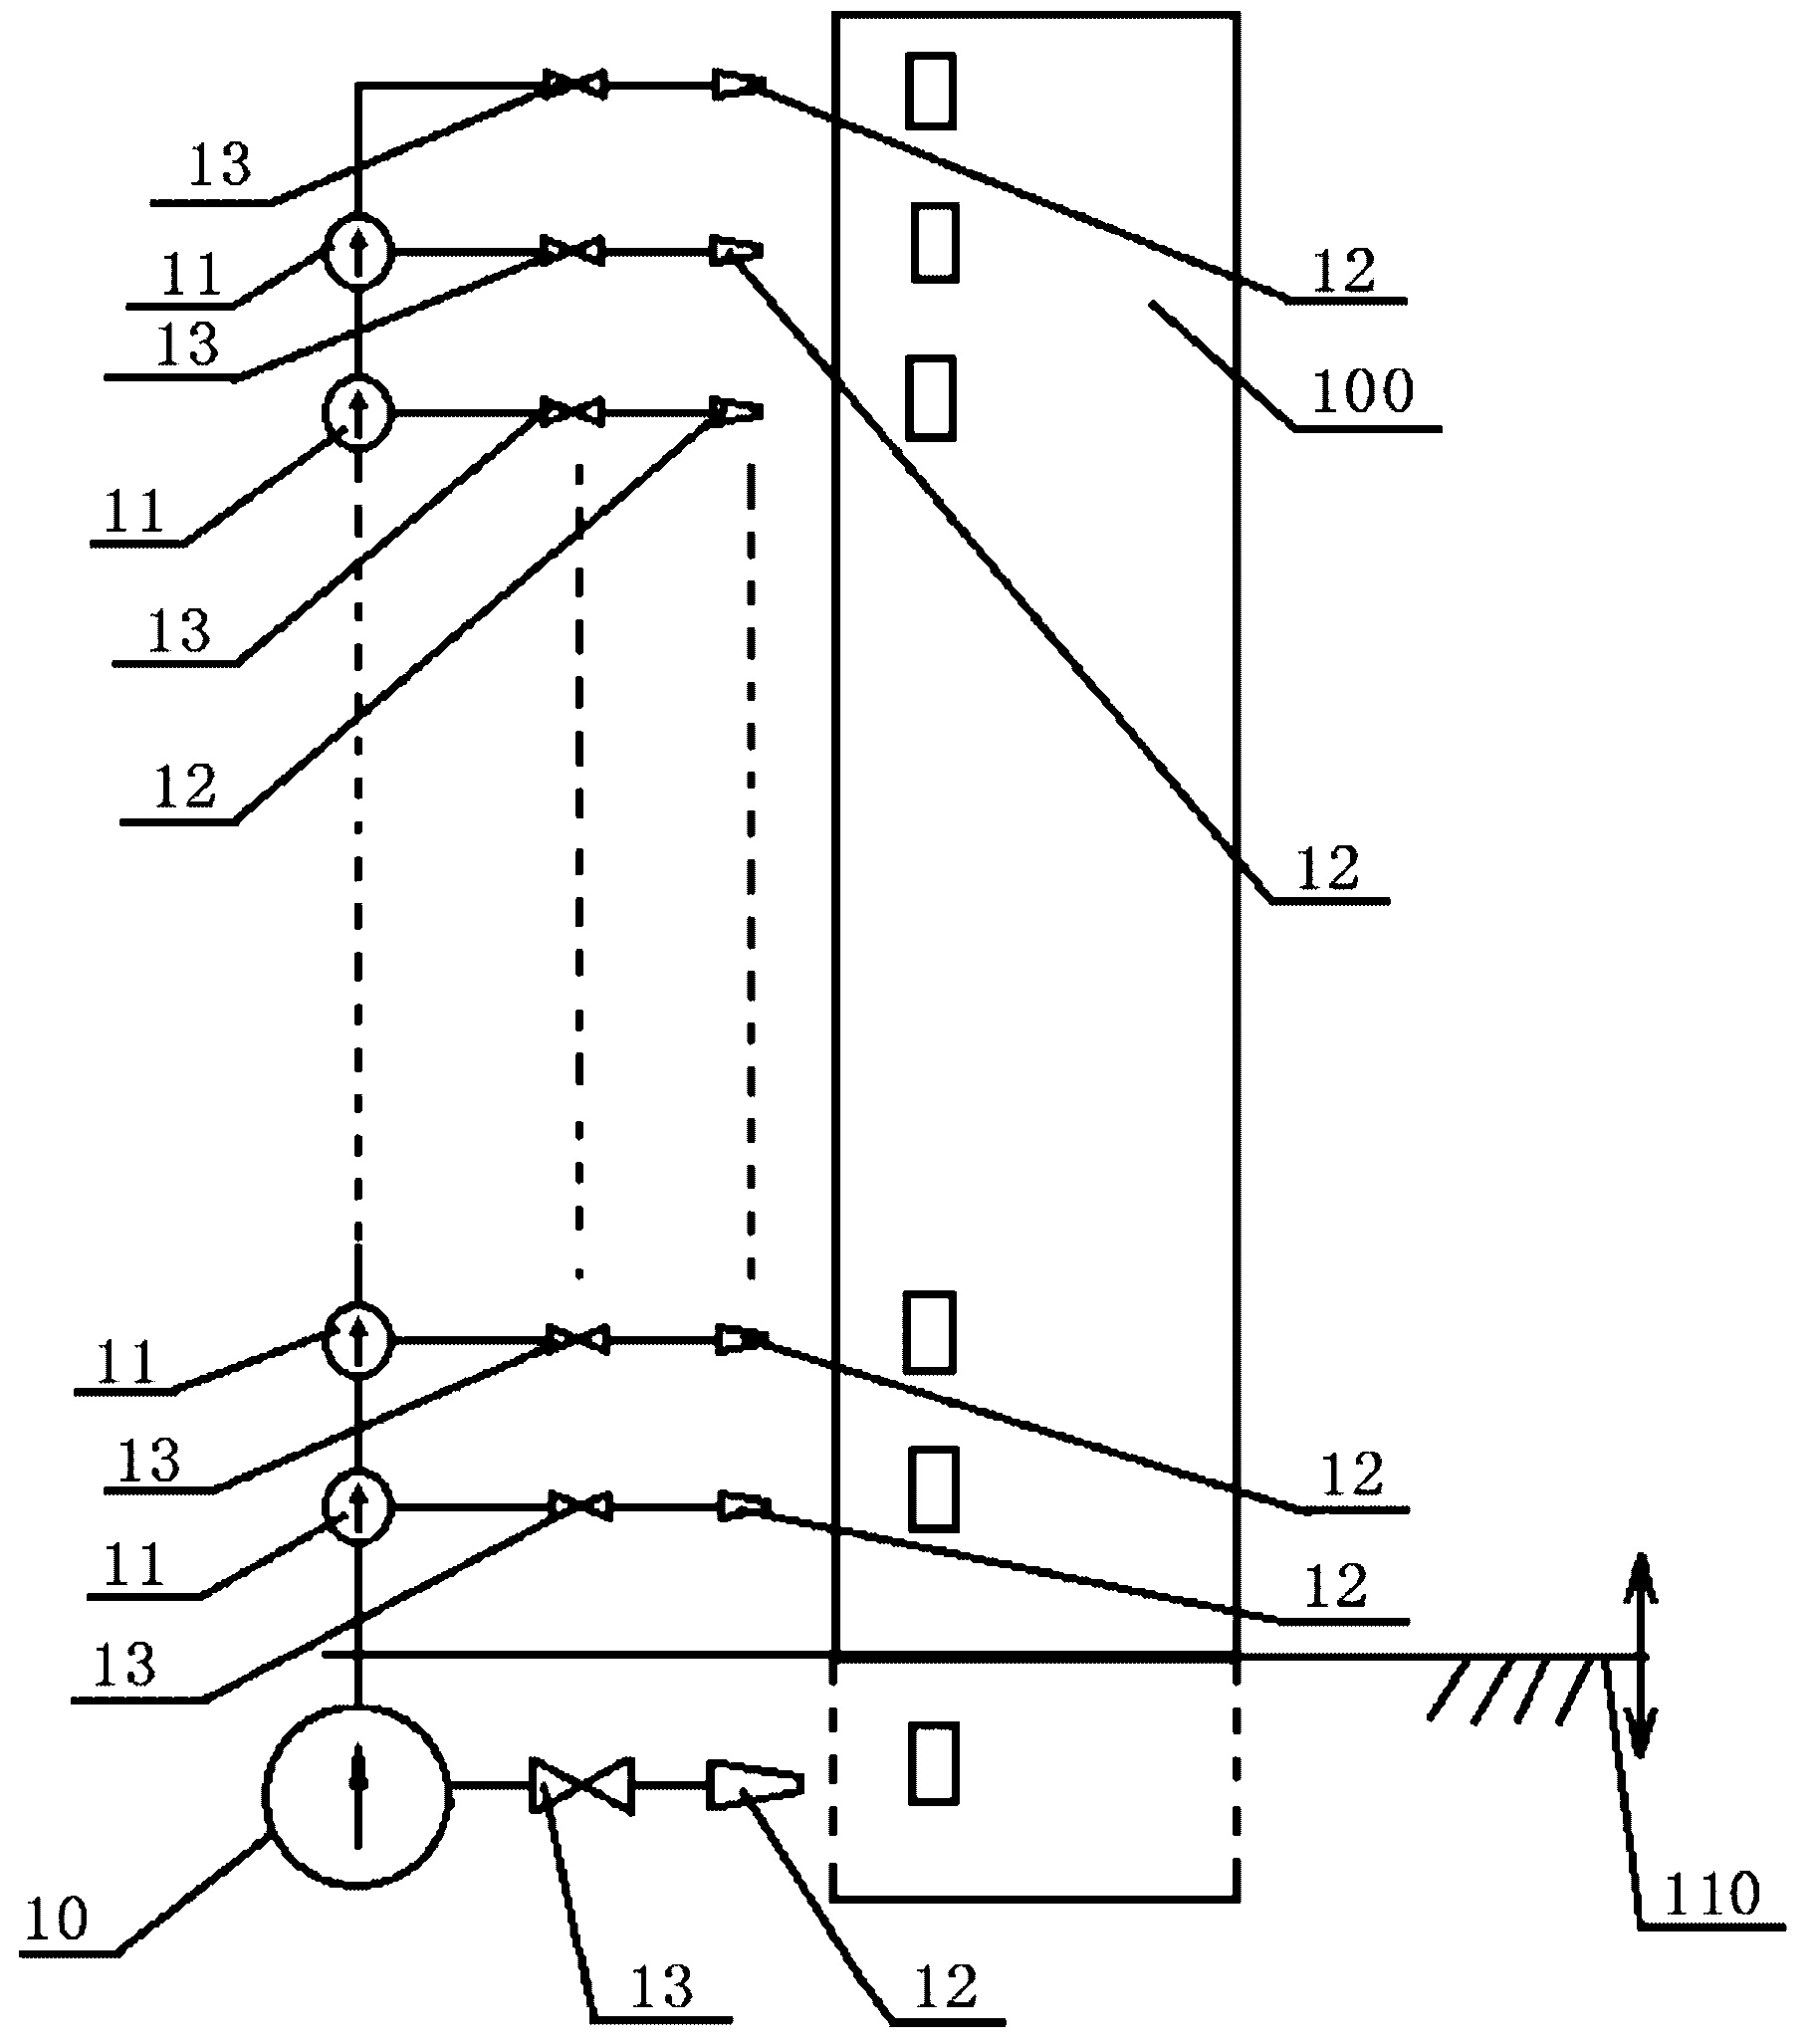 Sub-super linear array relay pump system